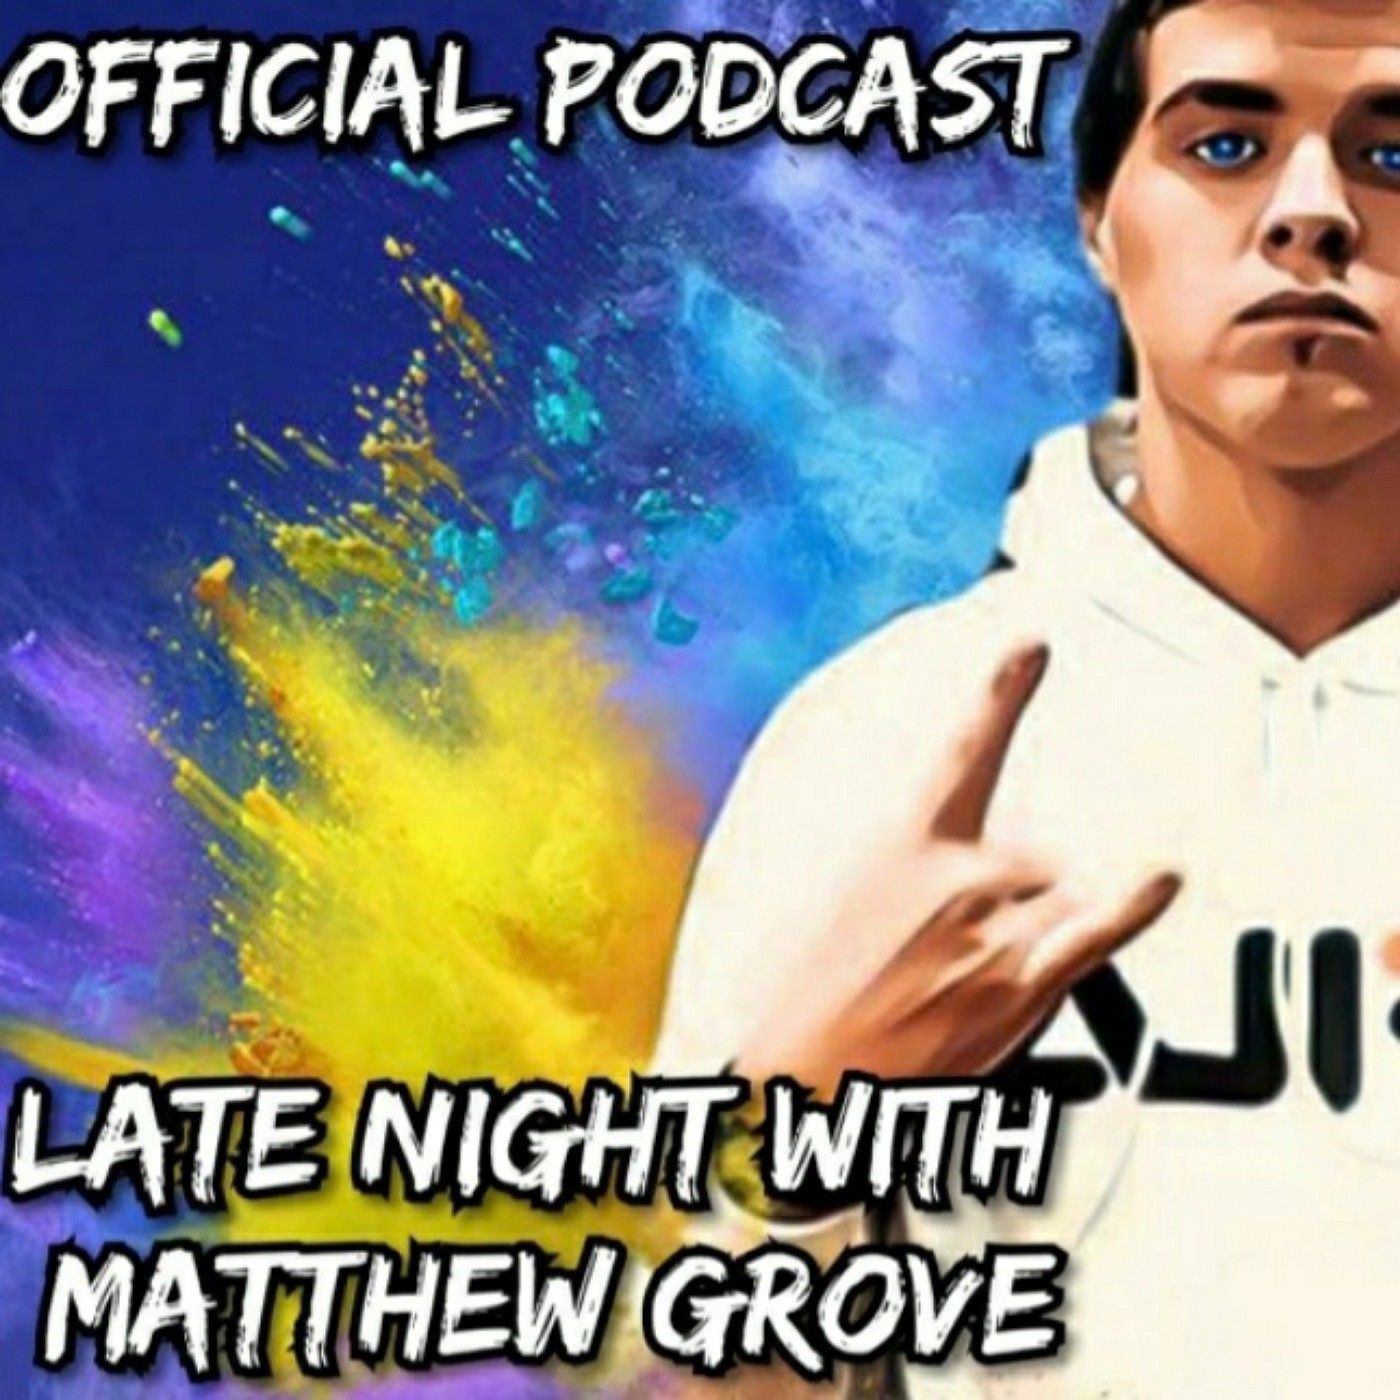 LATE NIGHT WITH MATTHEW GROVE